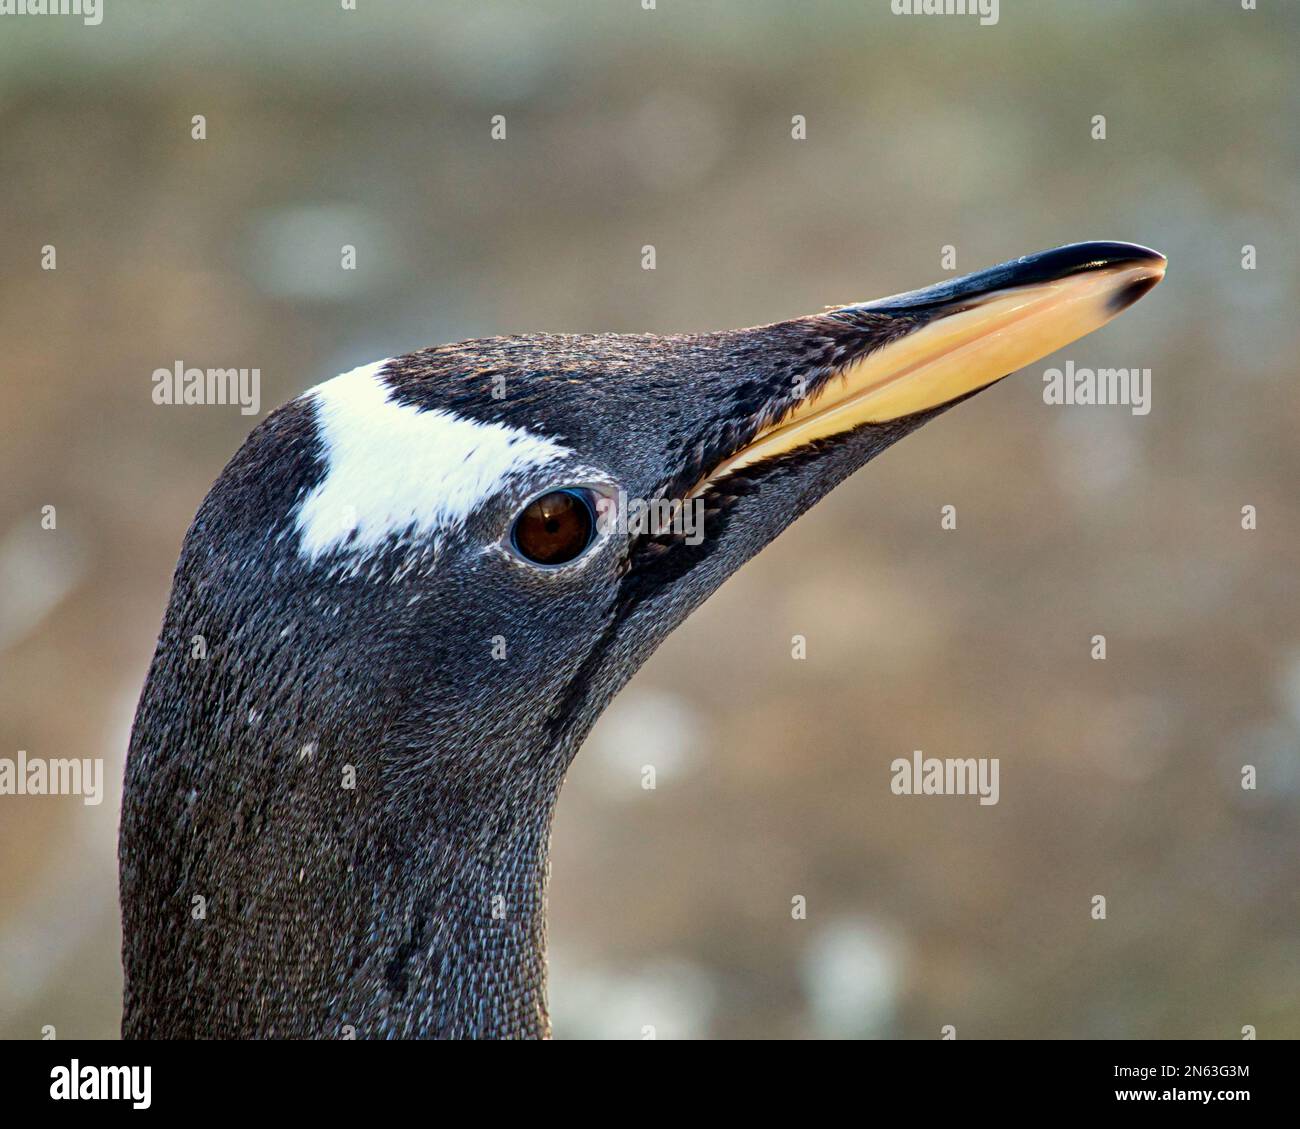 Gentoo penguin headshot close up at Edinburgh zoo Stock Photo